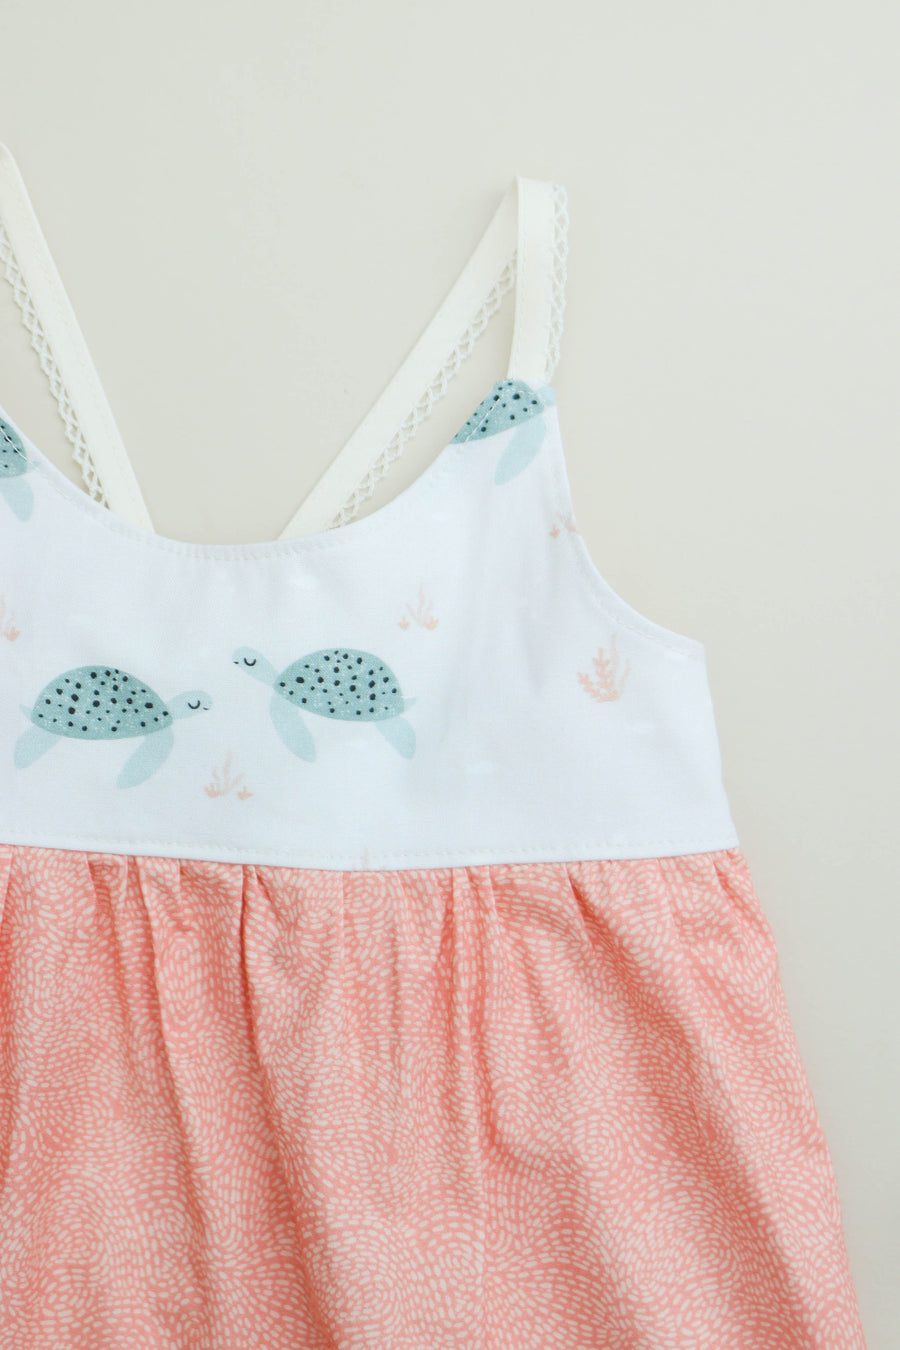 Turtle / Honu Love Girls Dress - Toddler Dress - Baby Girl Dress - Made in Hawaii